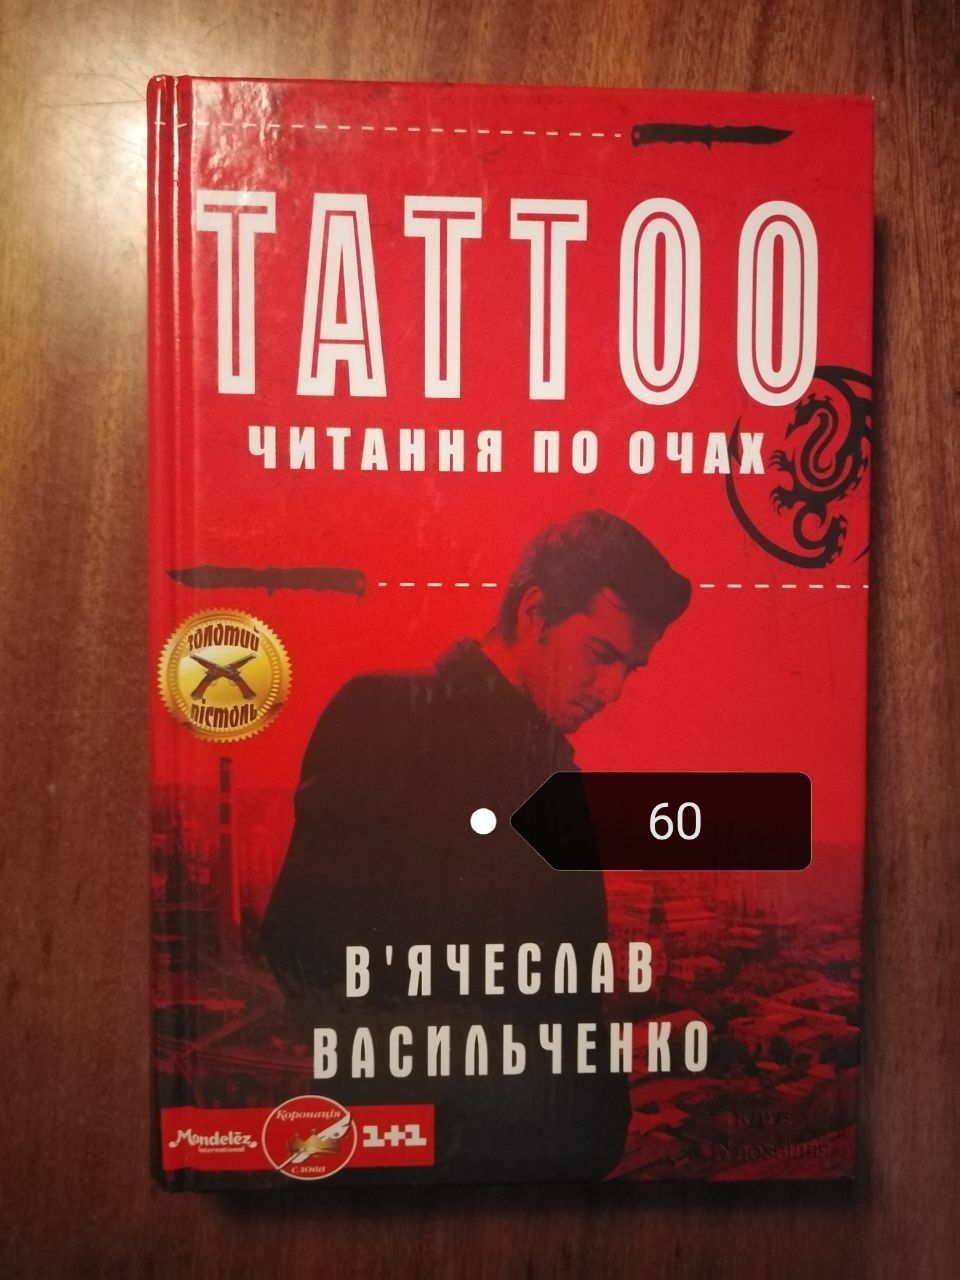 Книга В'ячеслав Васильченко "Tatoo читання по очах"